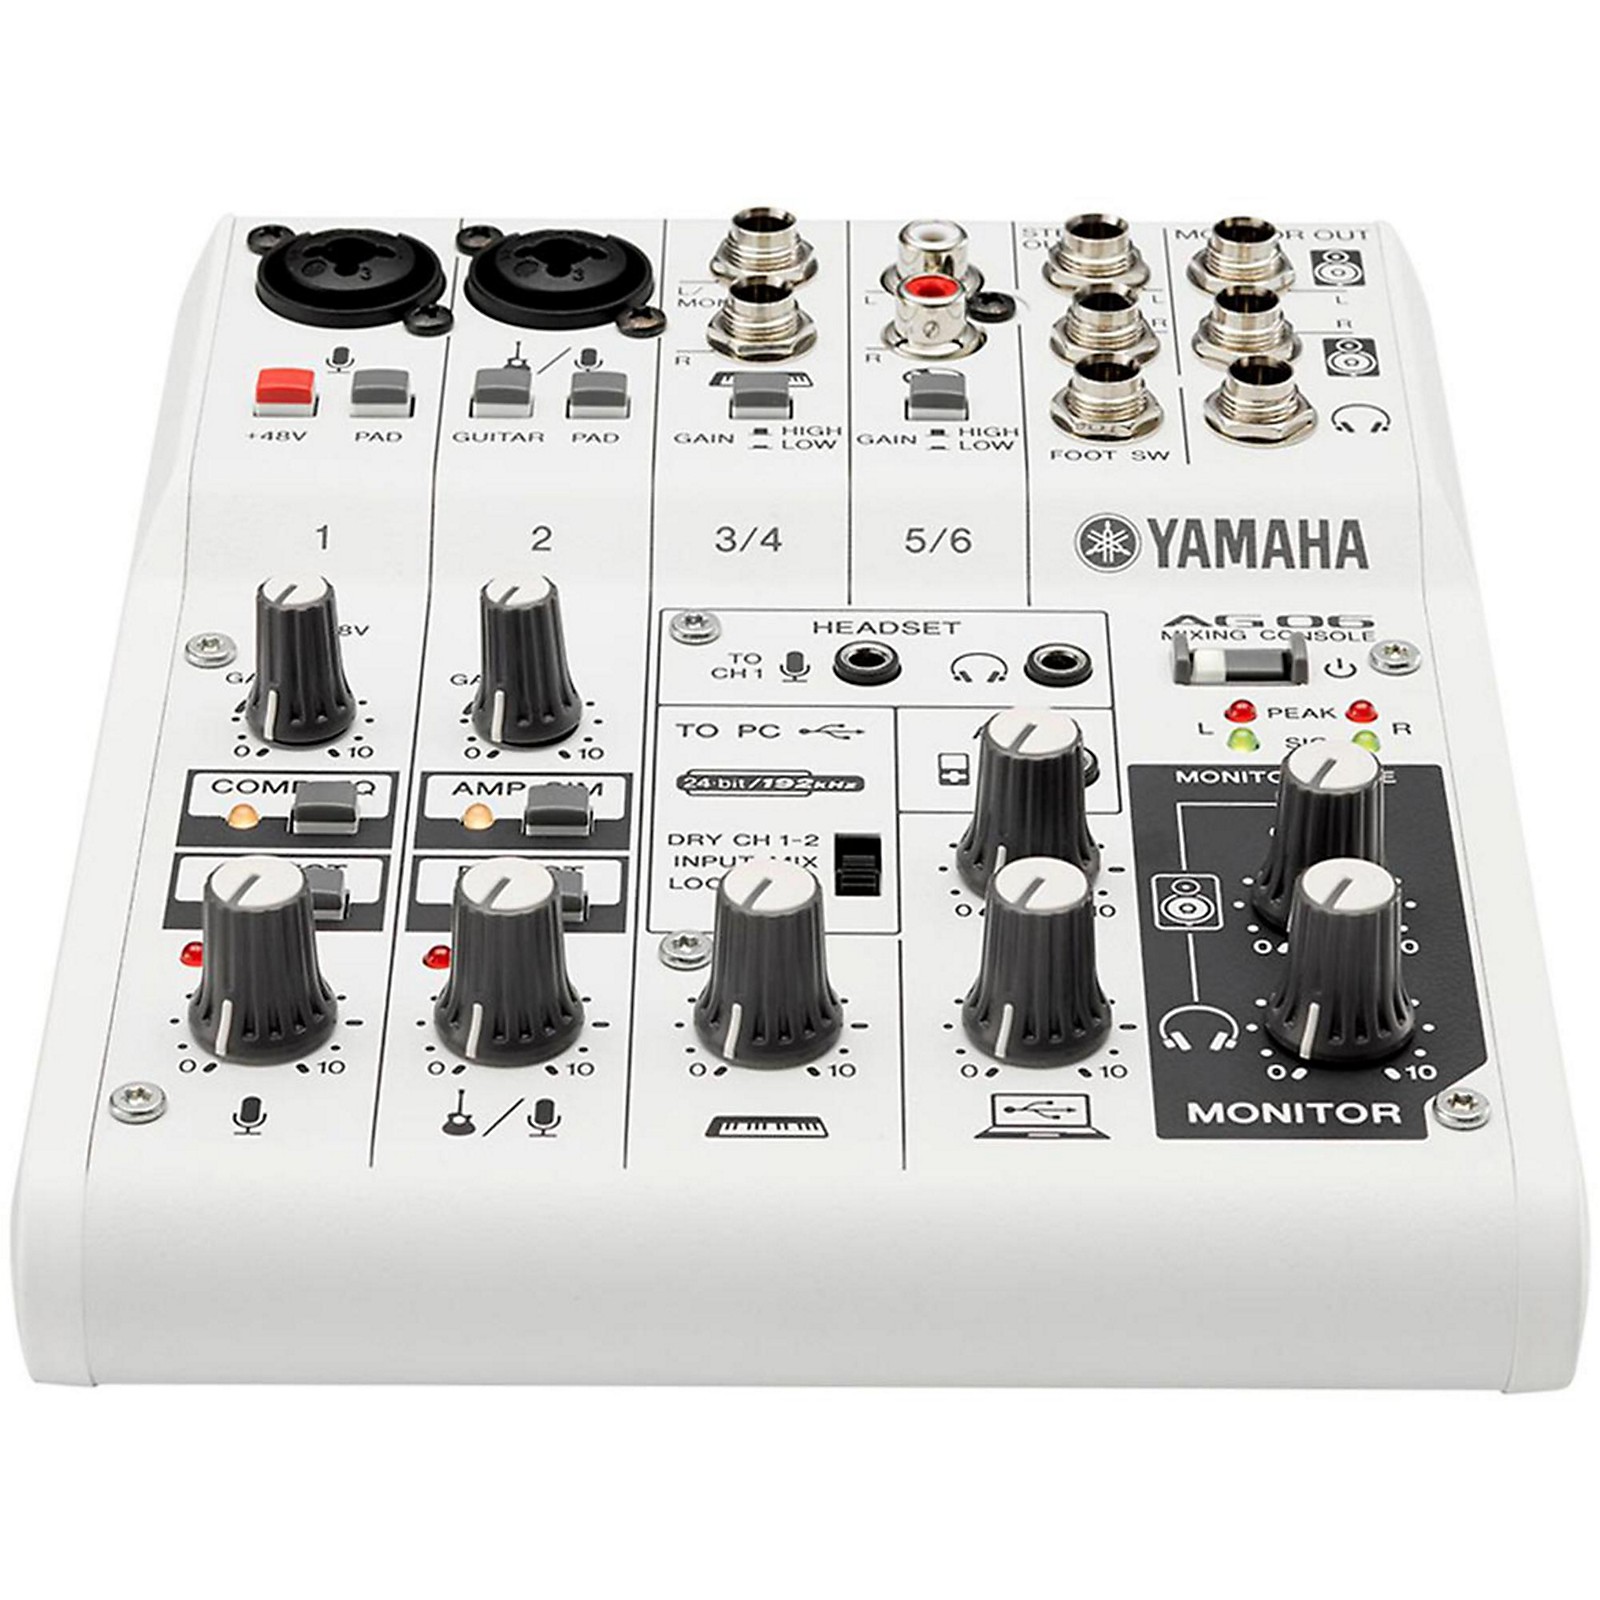 Yamaha Ag06 6 Channel Mixer Usb Interface For Ios Mac Pc Musician S Friend